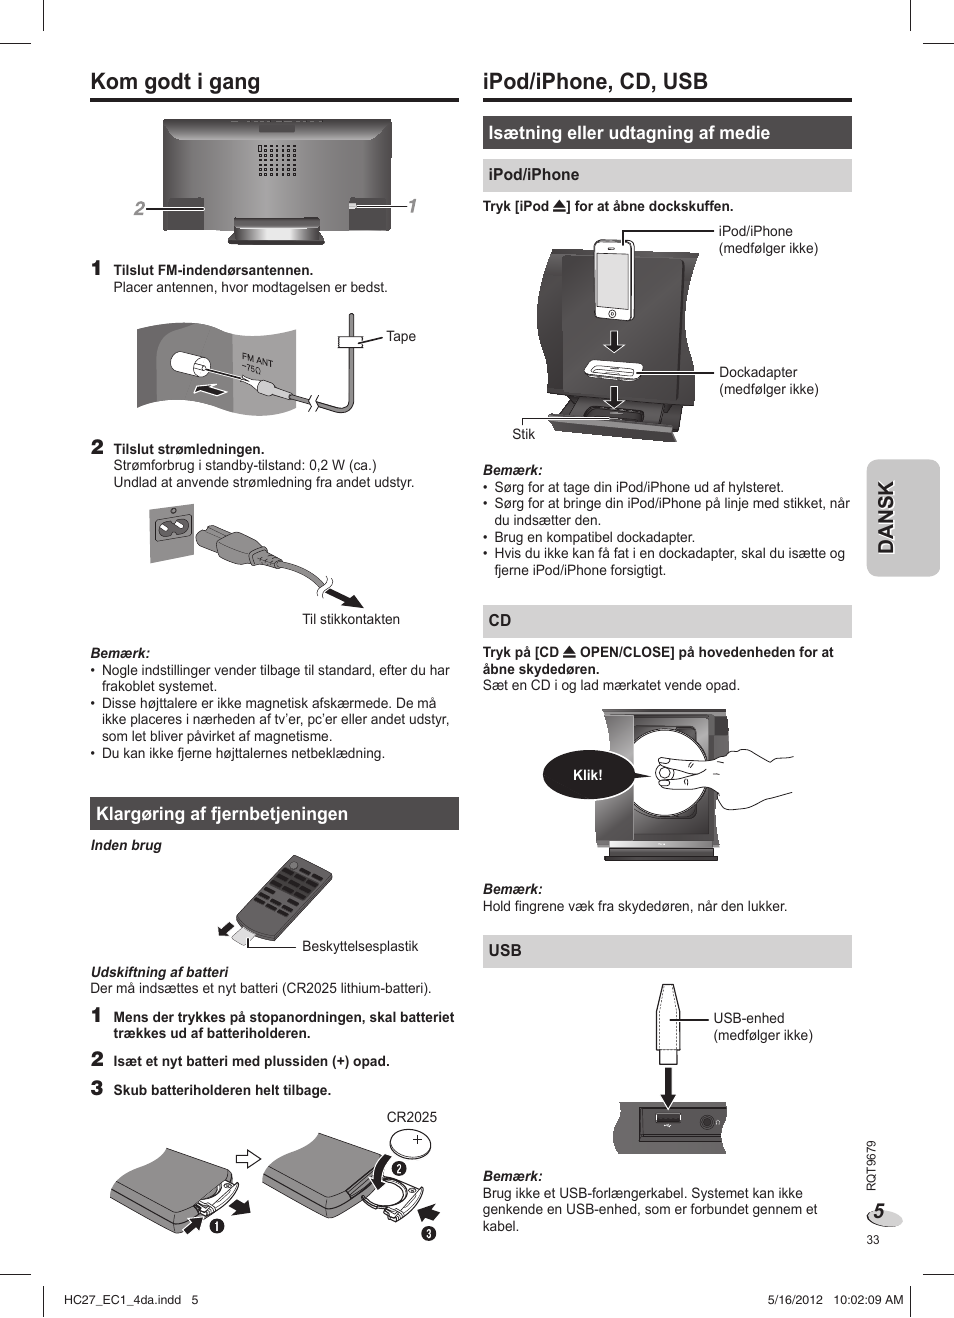 Ipod/iphone, cd, usb, Kom godt i gang | Panasonic SCHC27 User Manual | Page  33 / 68